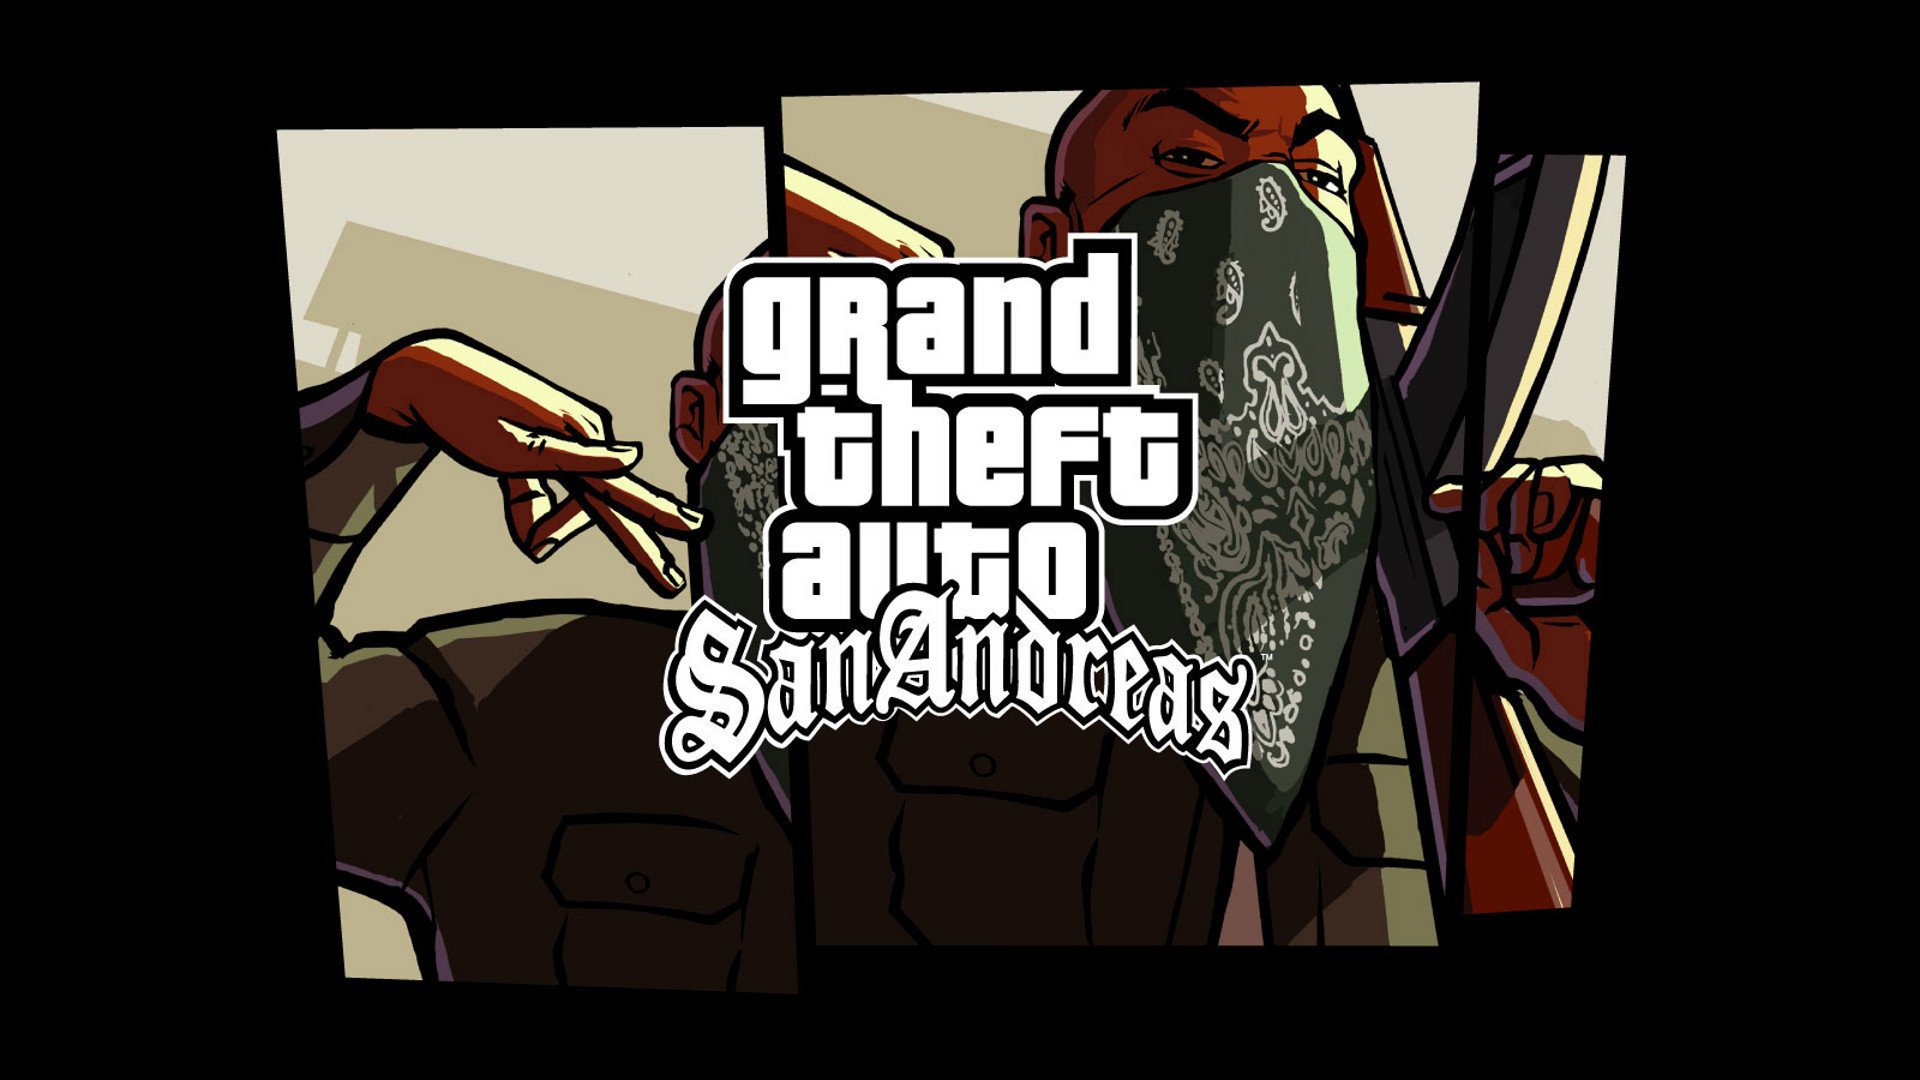 Grand Theft Auto: San Andreas (GTA SA) wallpapers HD for desktop backgrounds